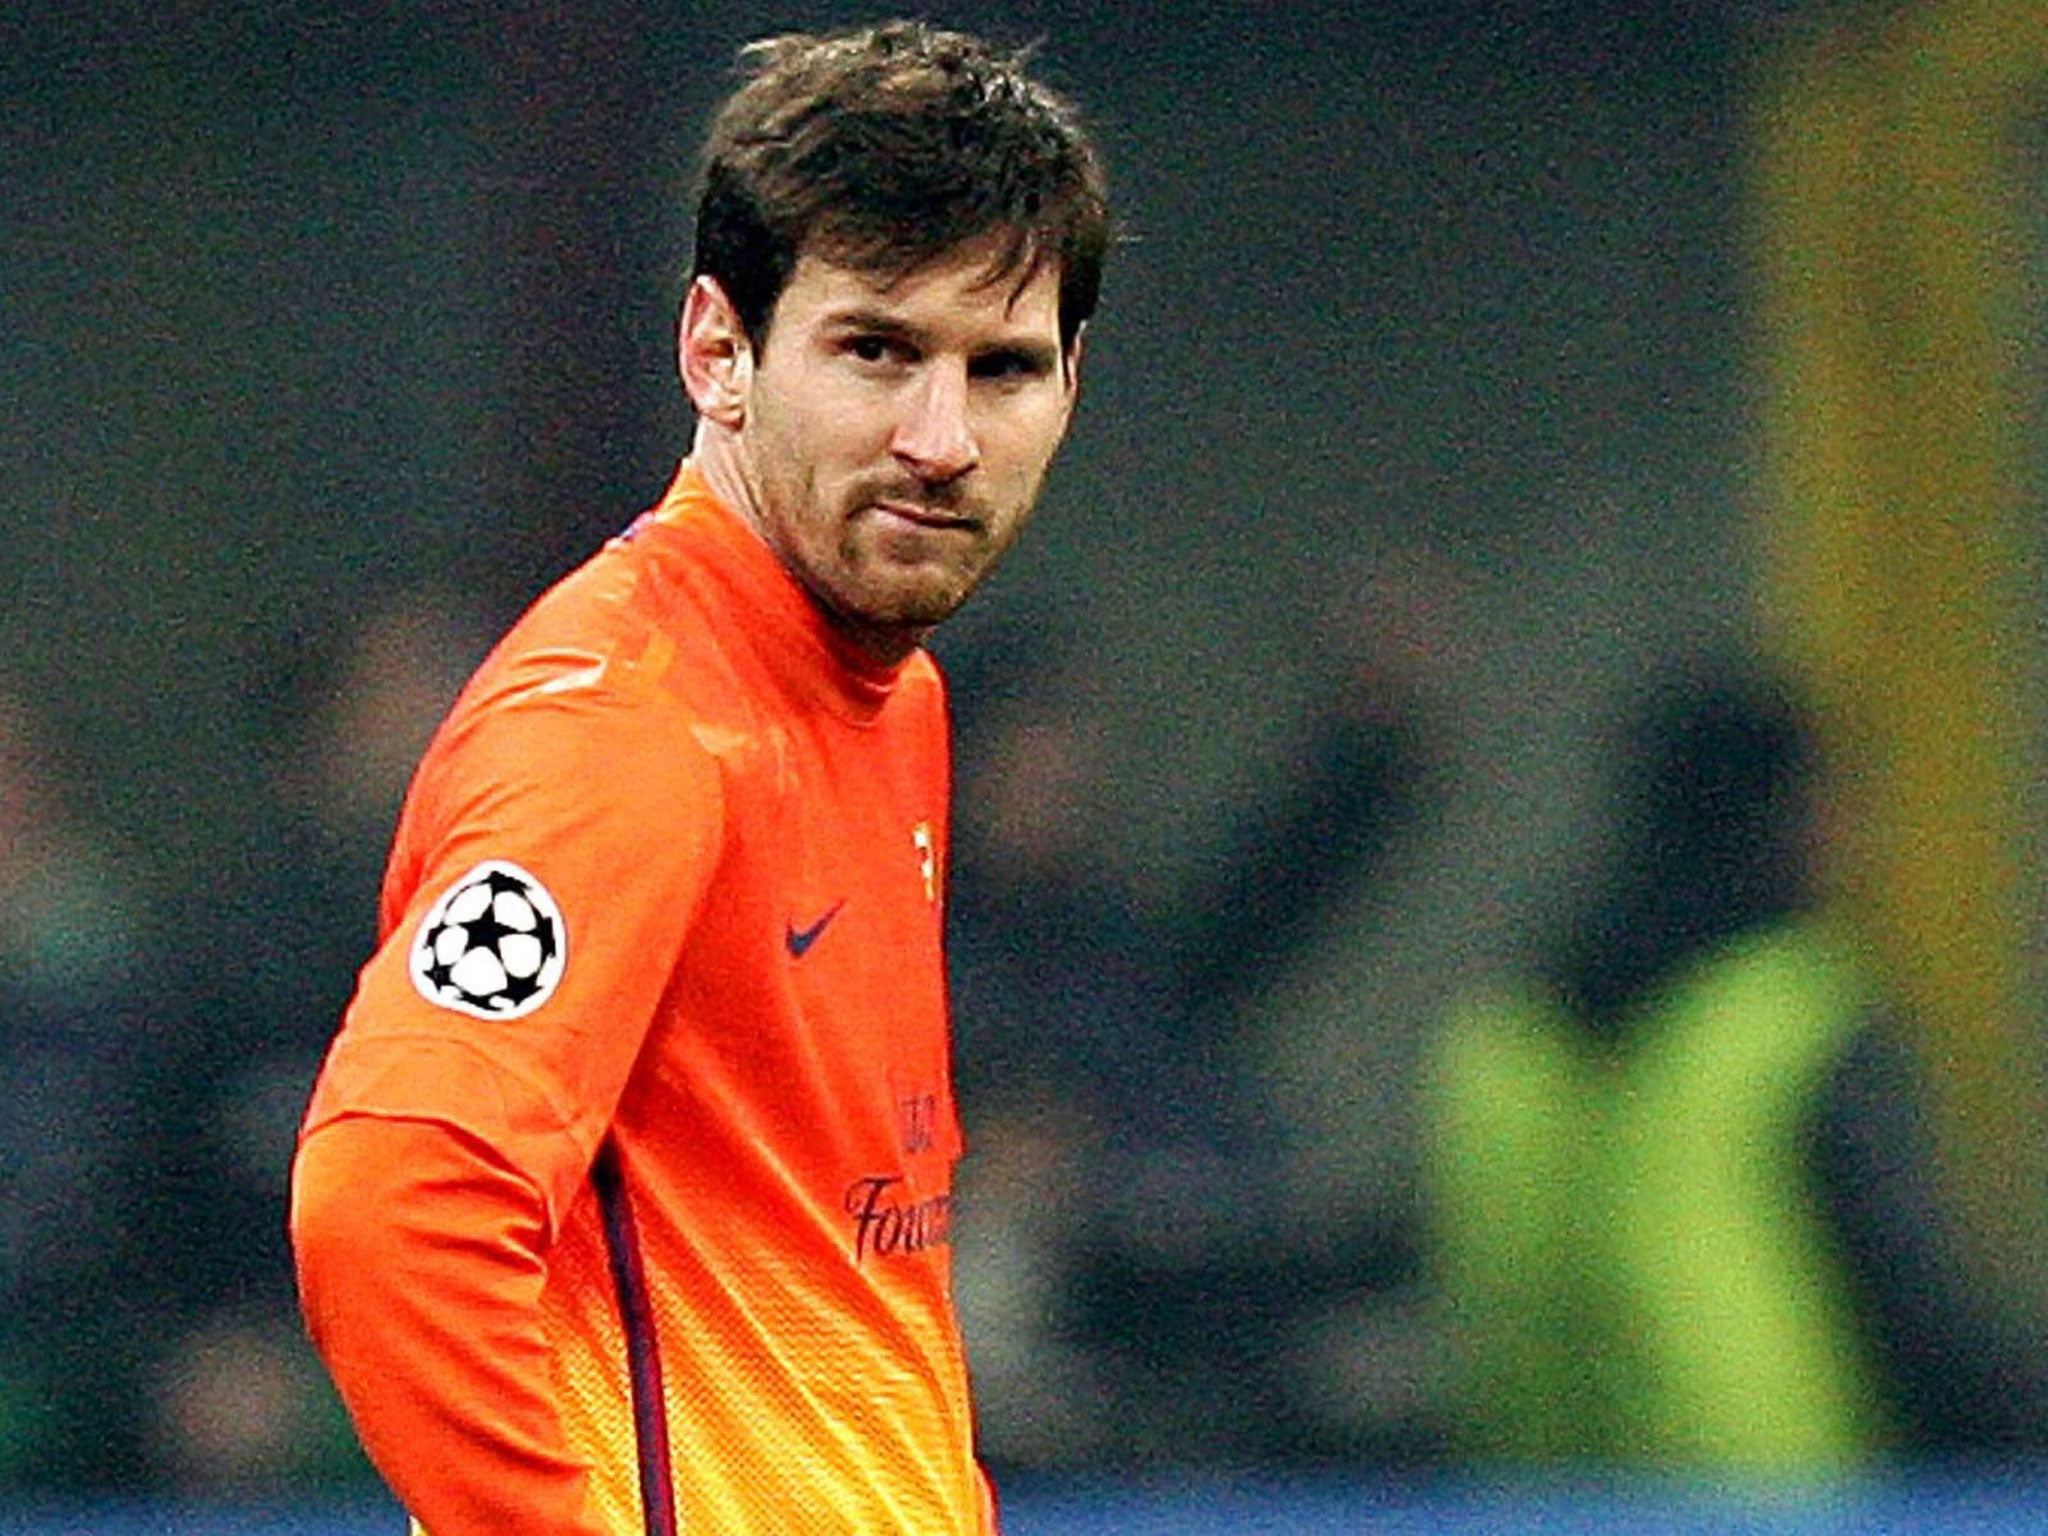 Lionel Messi endured a frustrating night against Milan